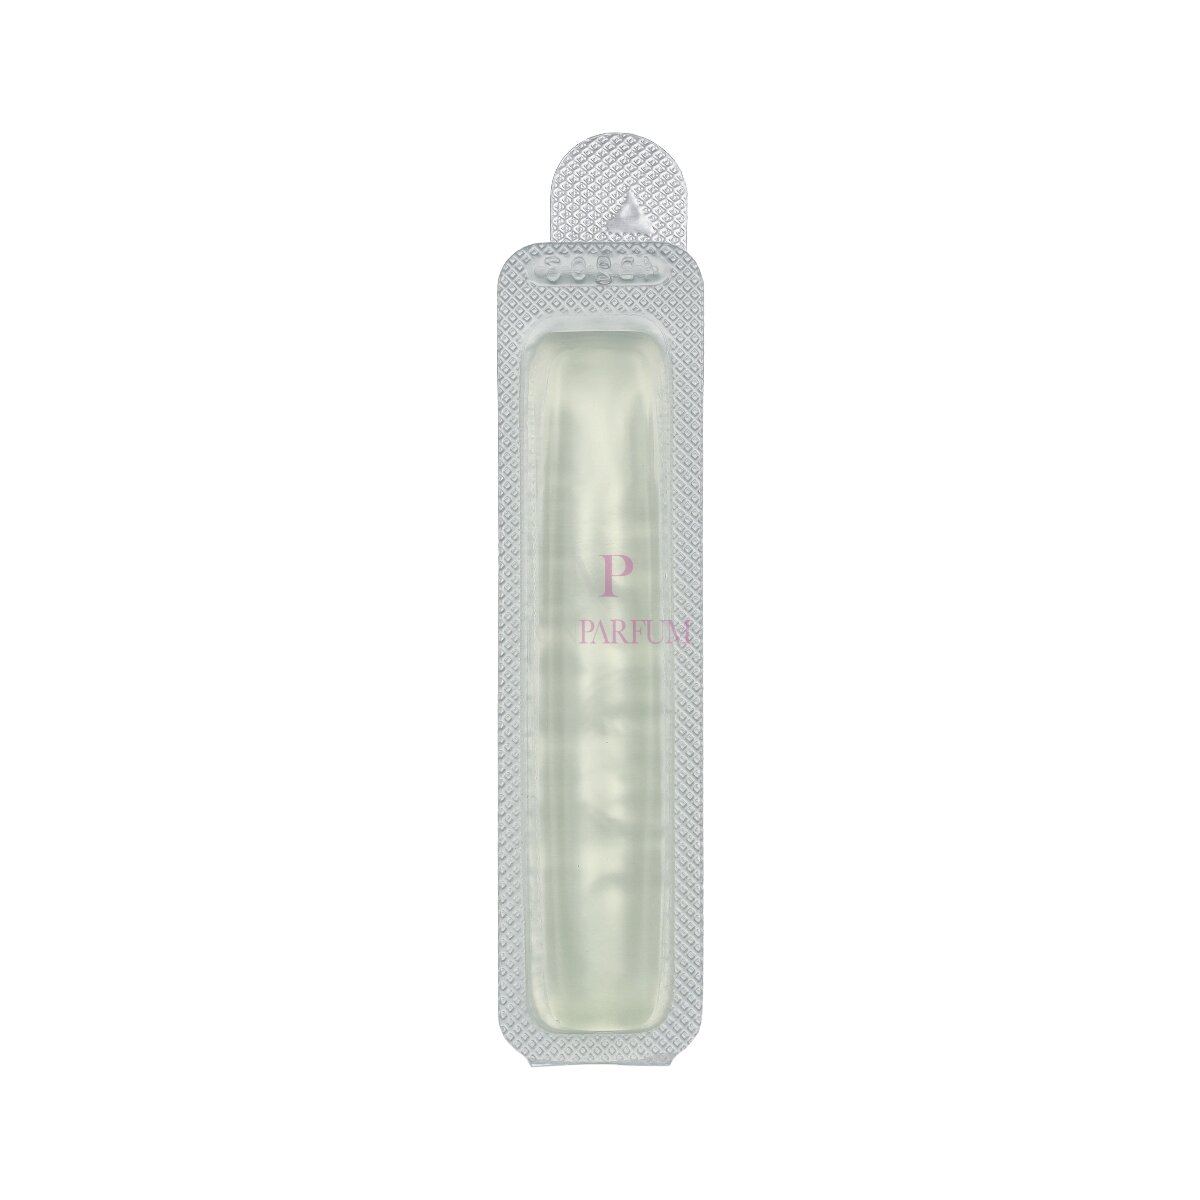 https://monparfum.de/media/image/product/217458/lg/rituals-liaj-sakura-car-perfume-refill-6g.jpg